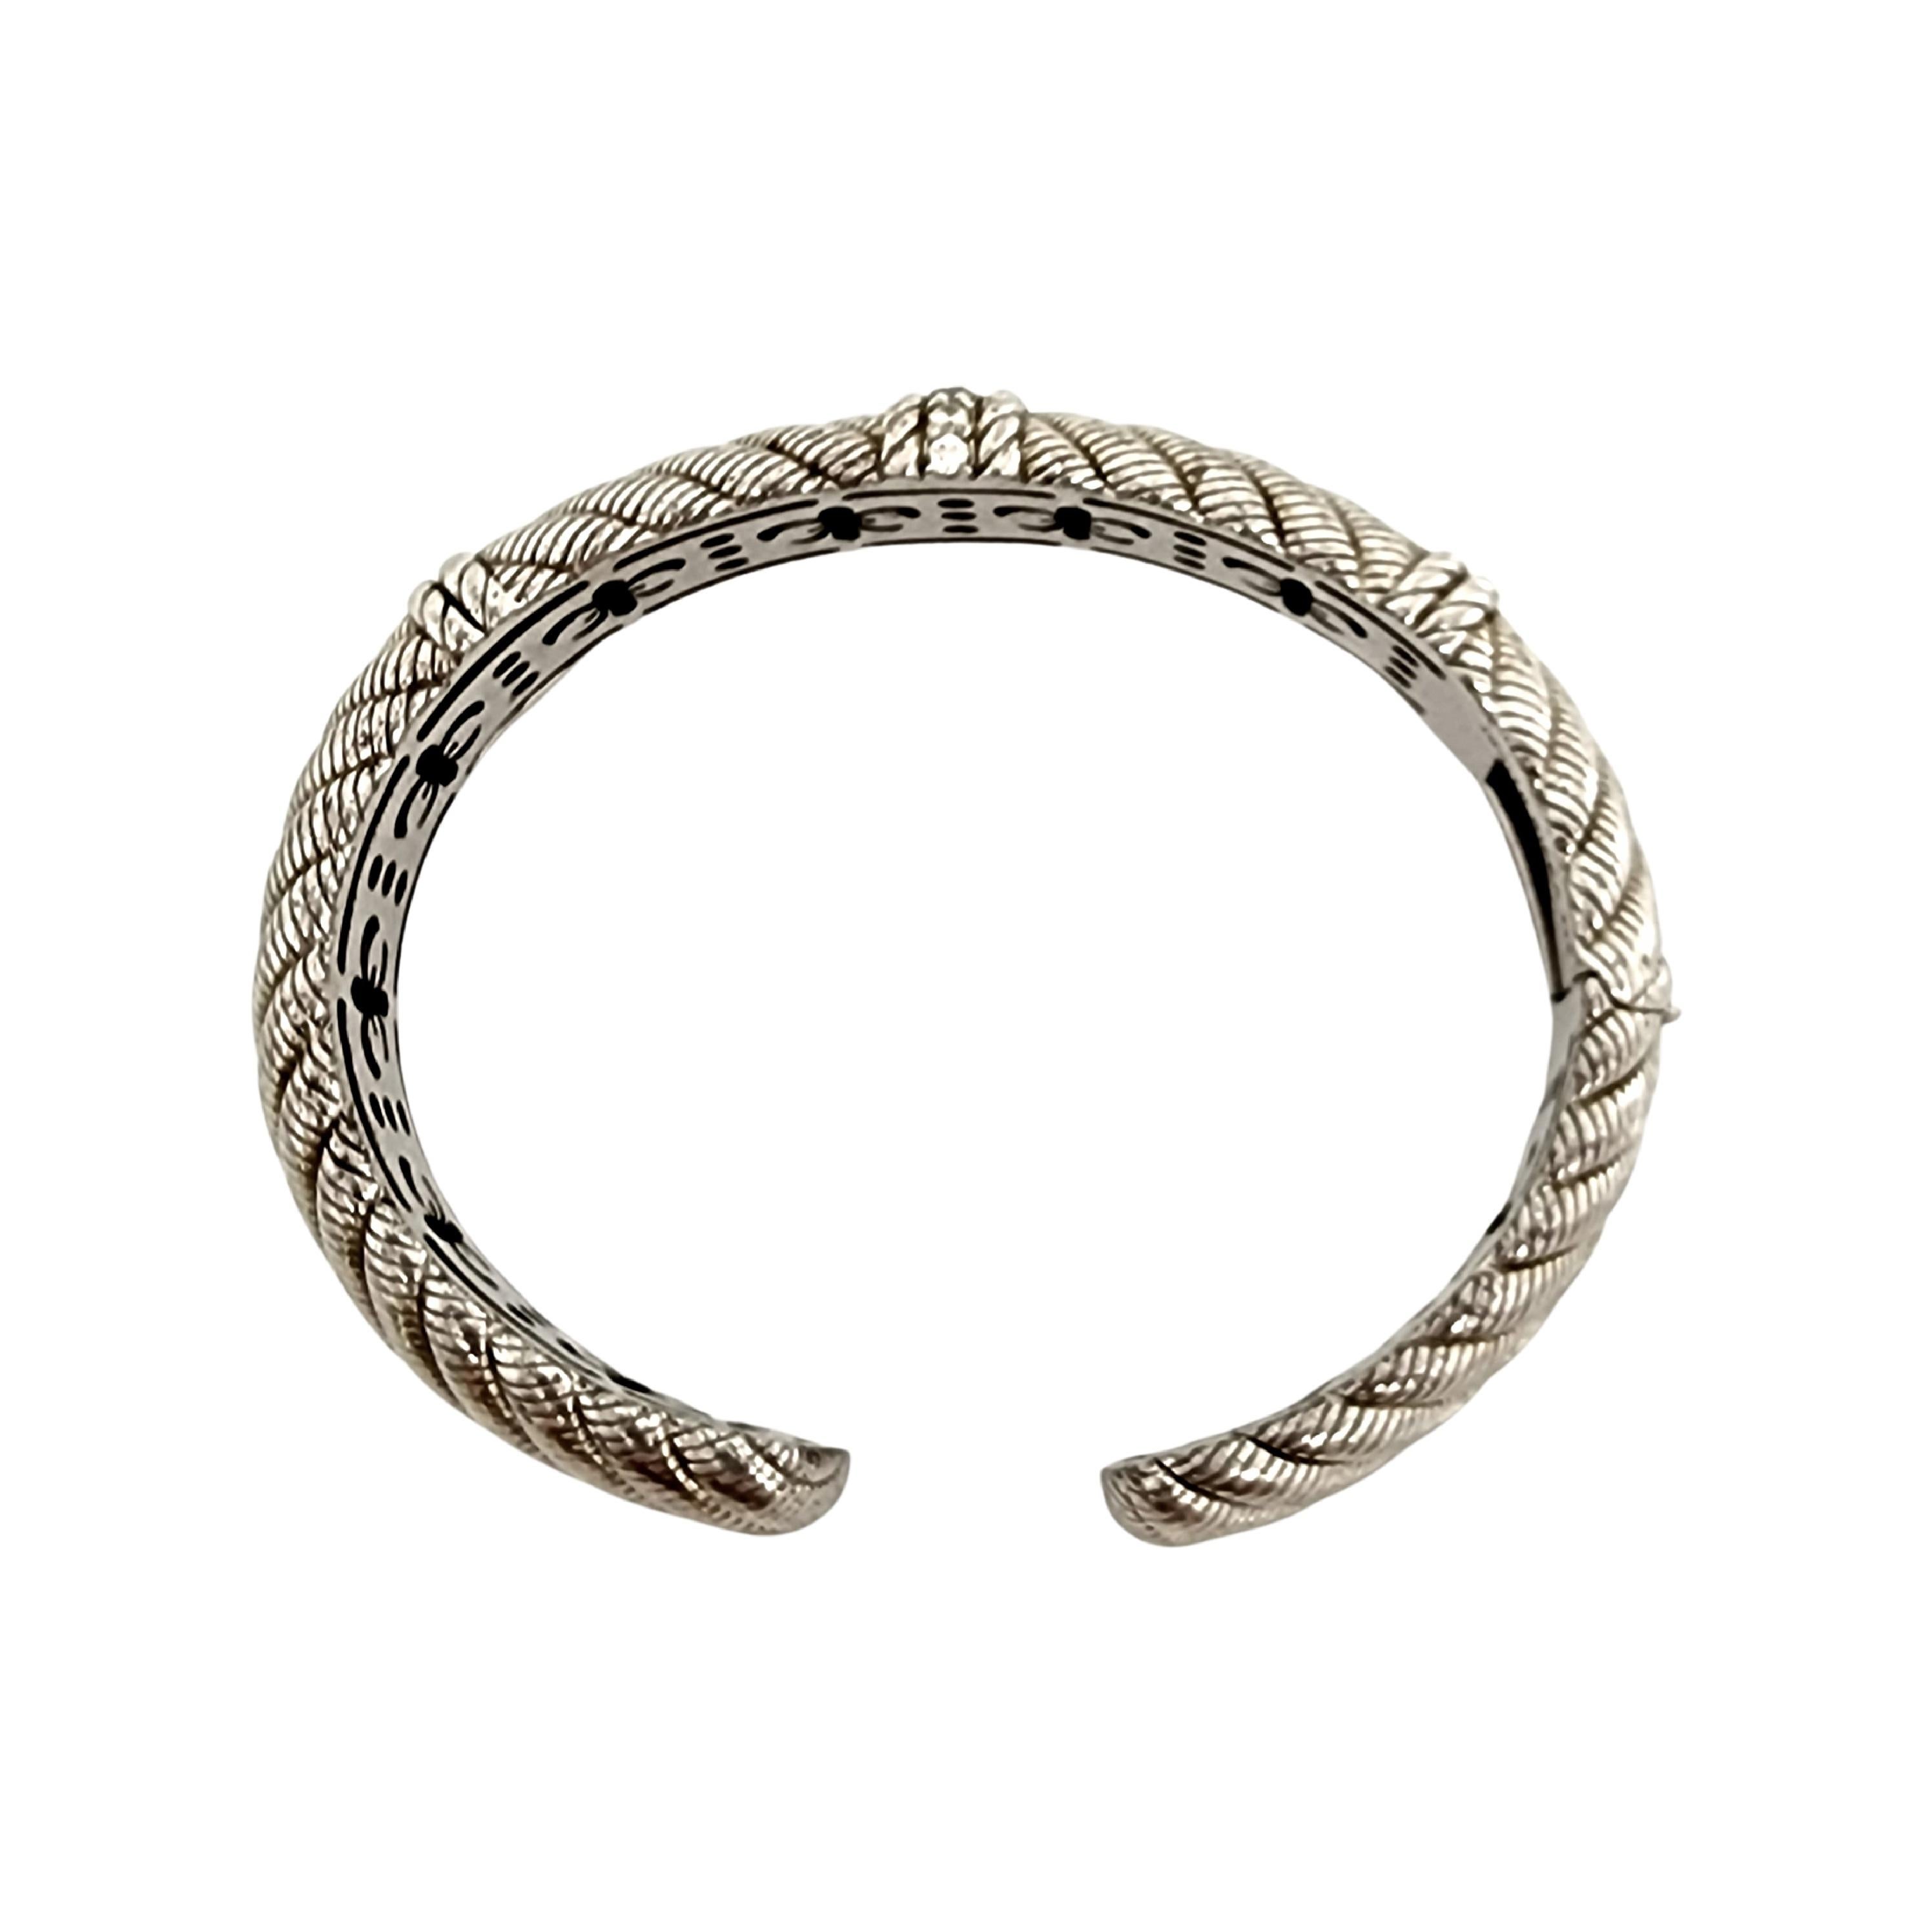 Round Cut Judith Ripka S S CZ Diamonique Wide Cable Twist Hinged Cuff Bracelet #12821 For Sale